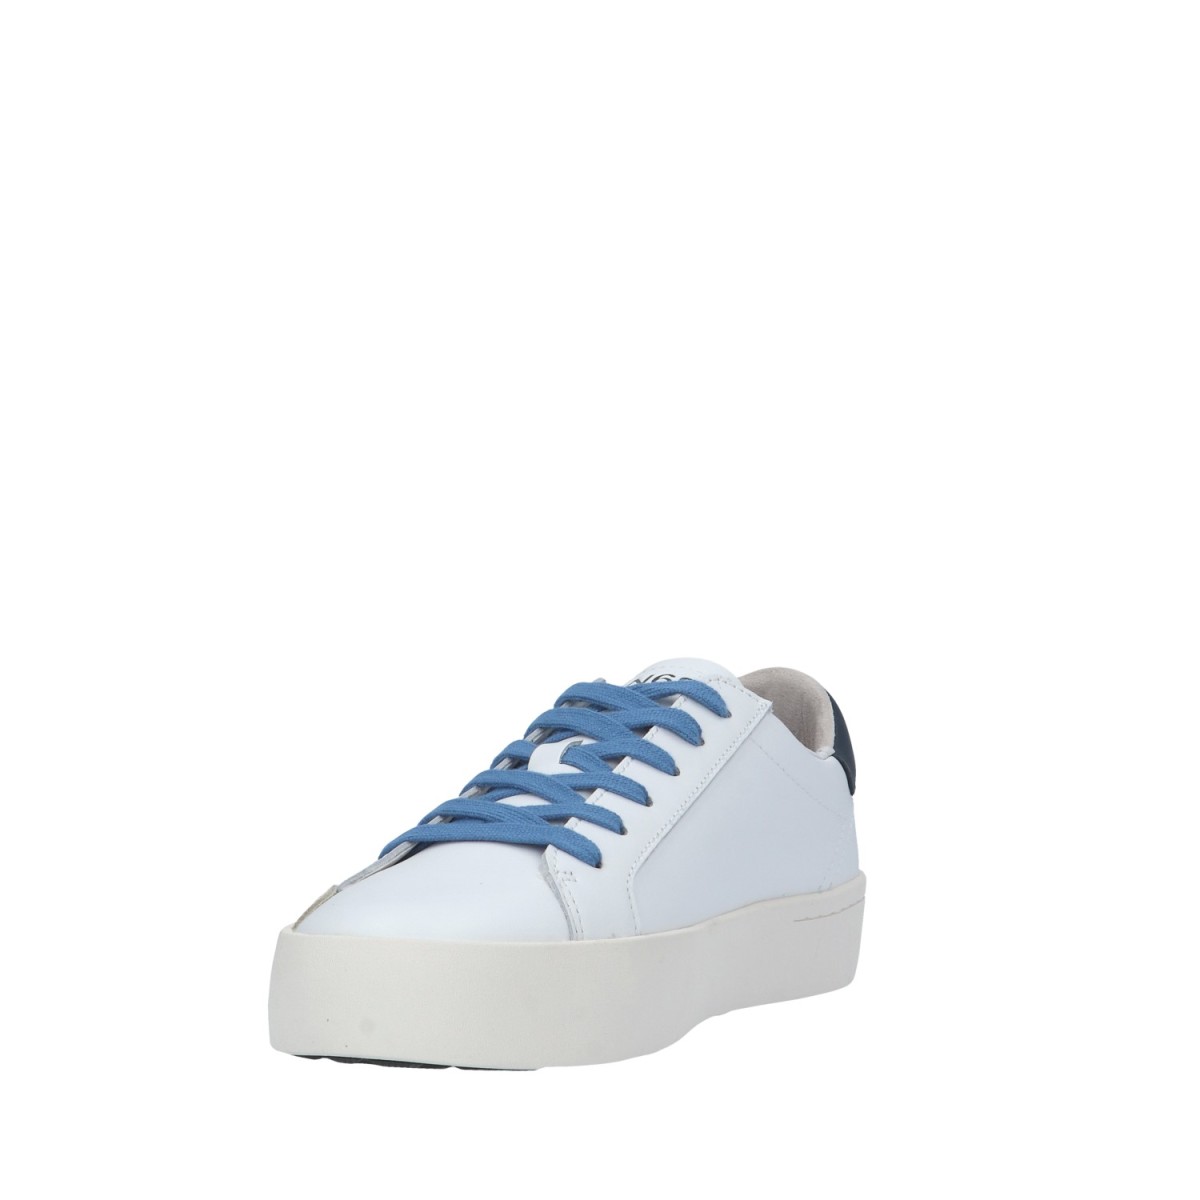 Sun68 Sneaker Bianco/navy Gomma Z34140